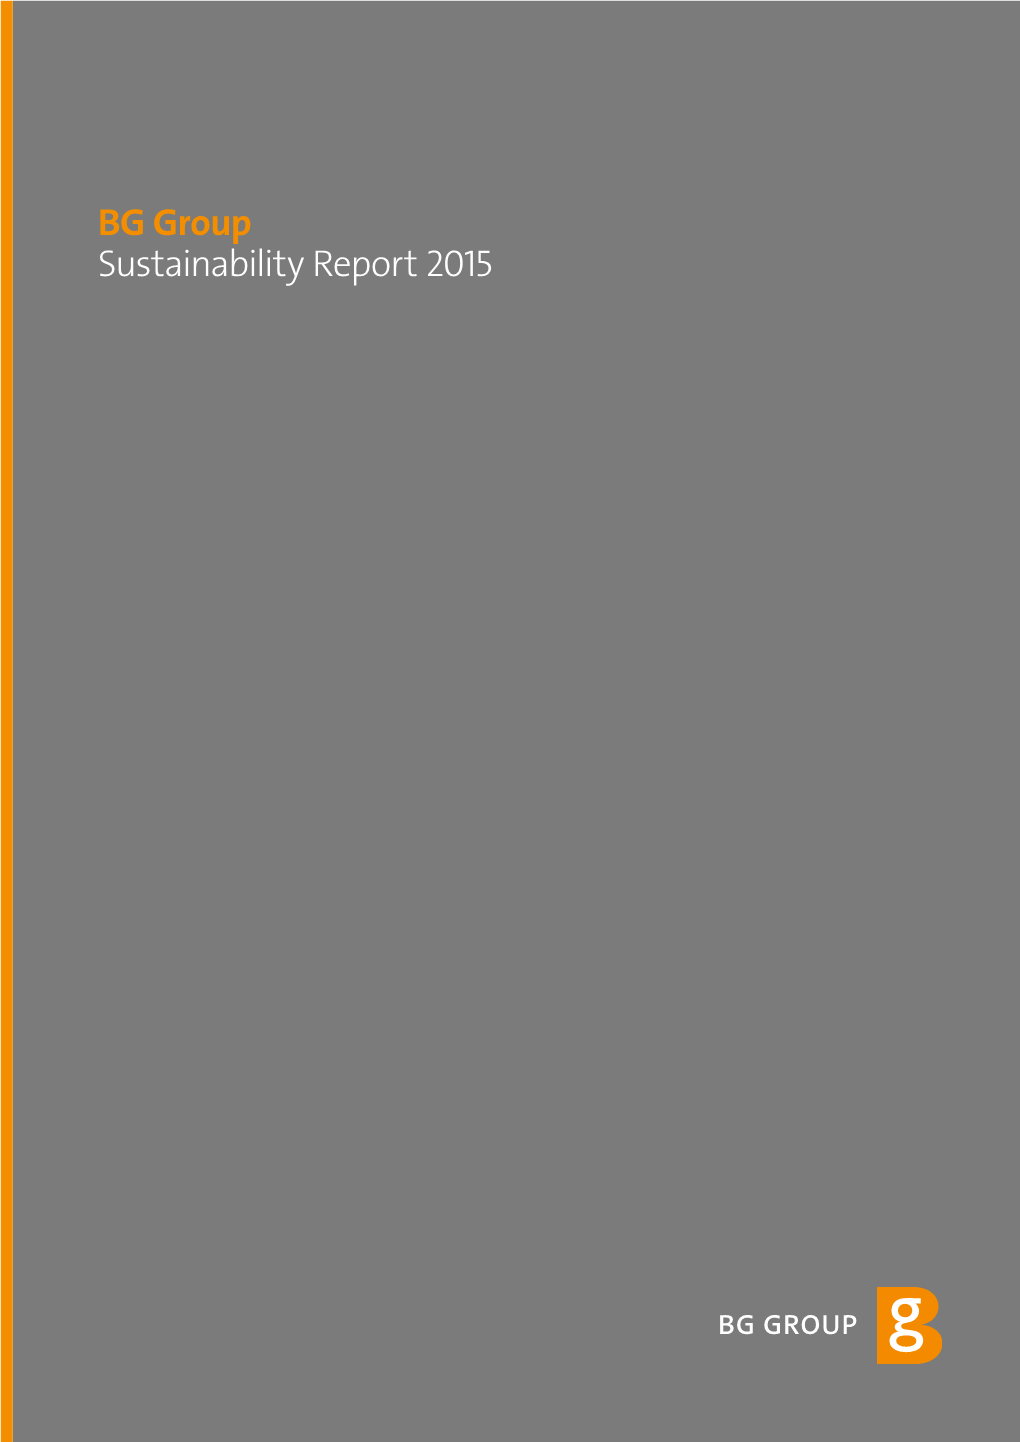 BG Group – Sustainability Report 2015